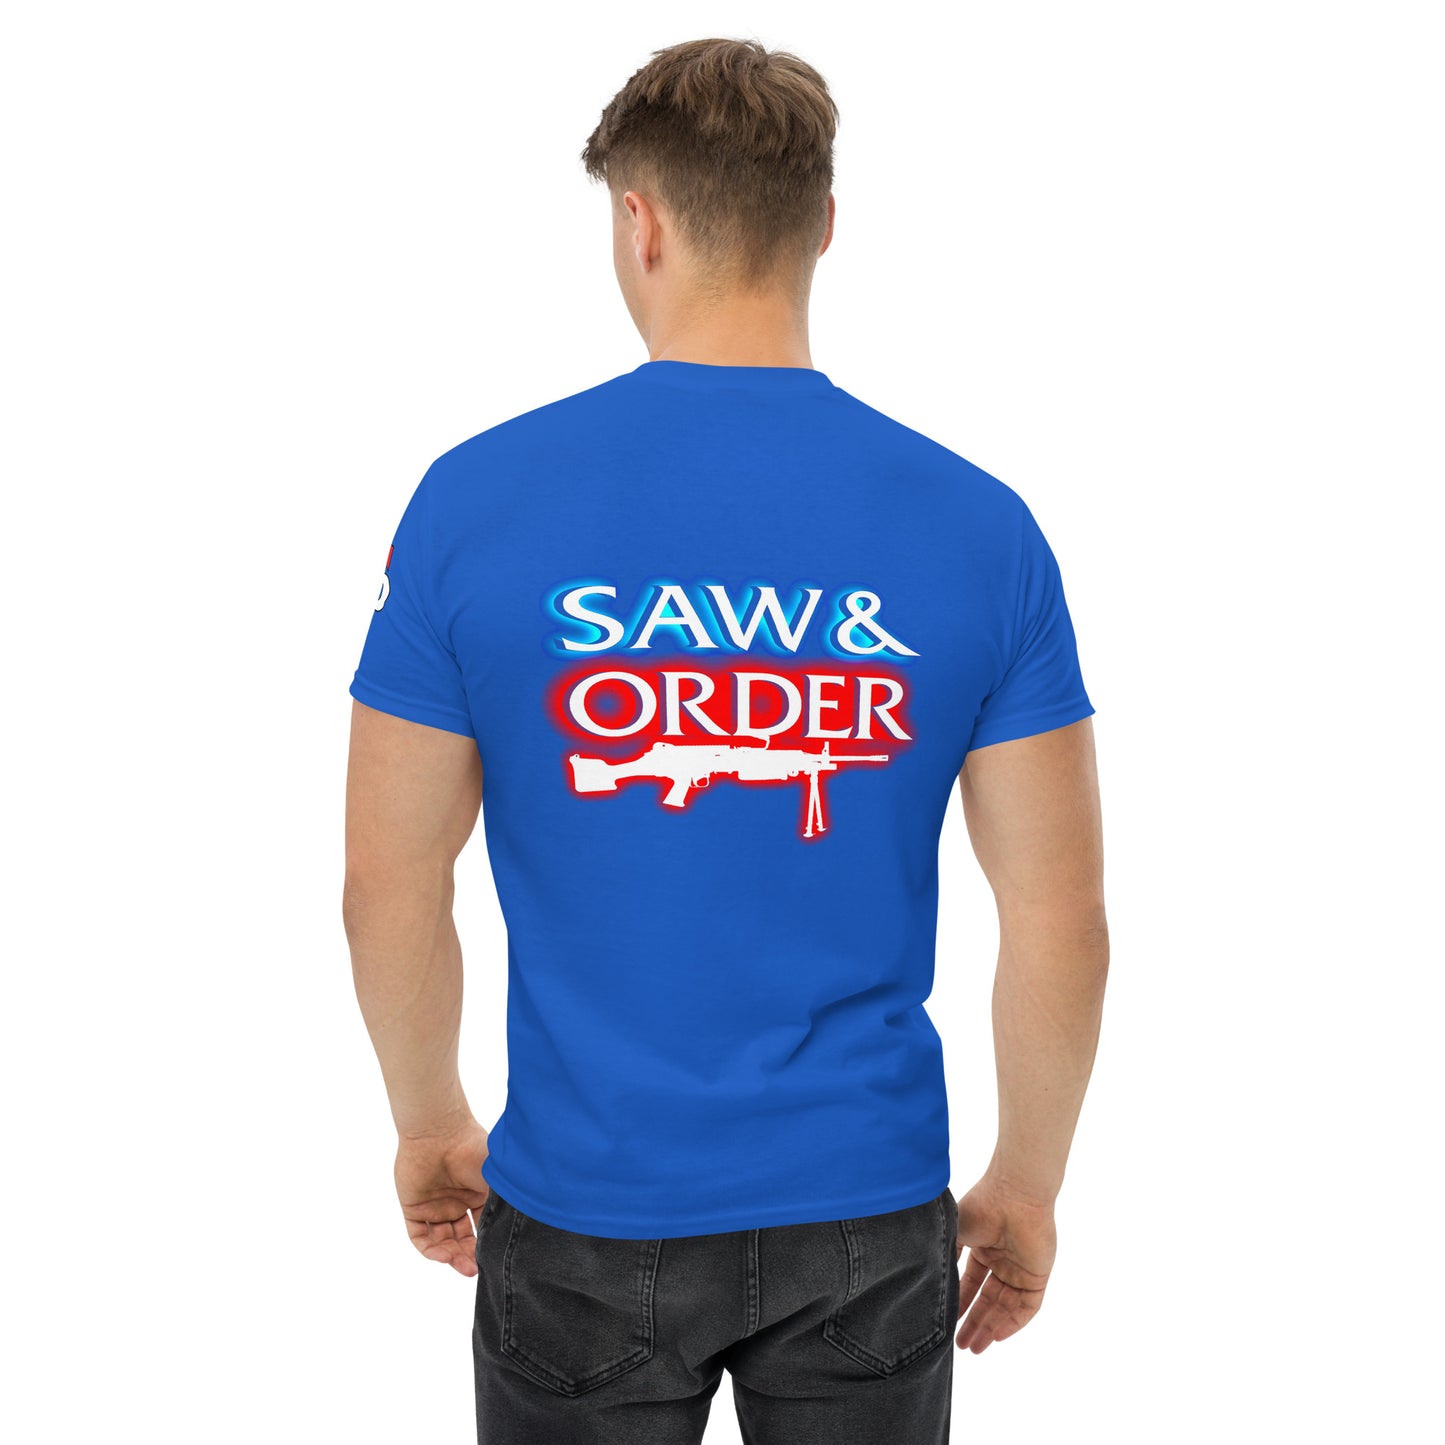 Saw & Order